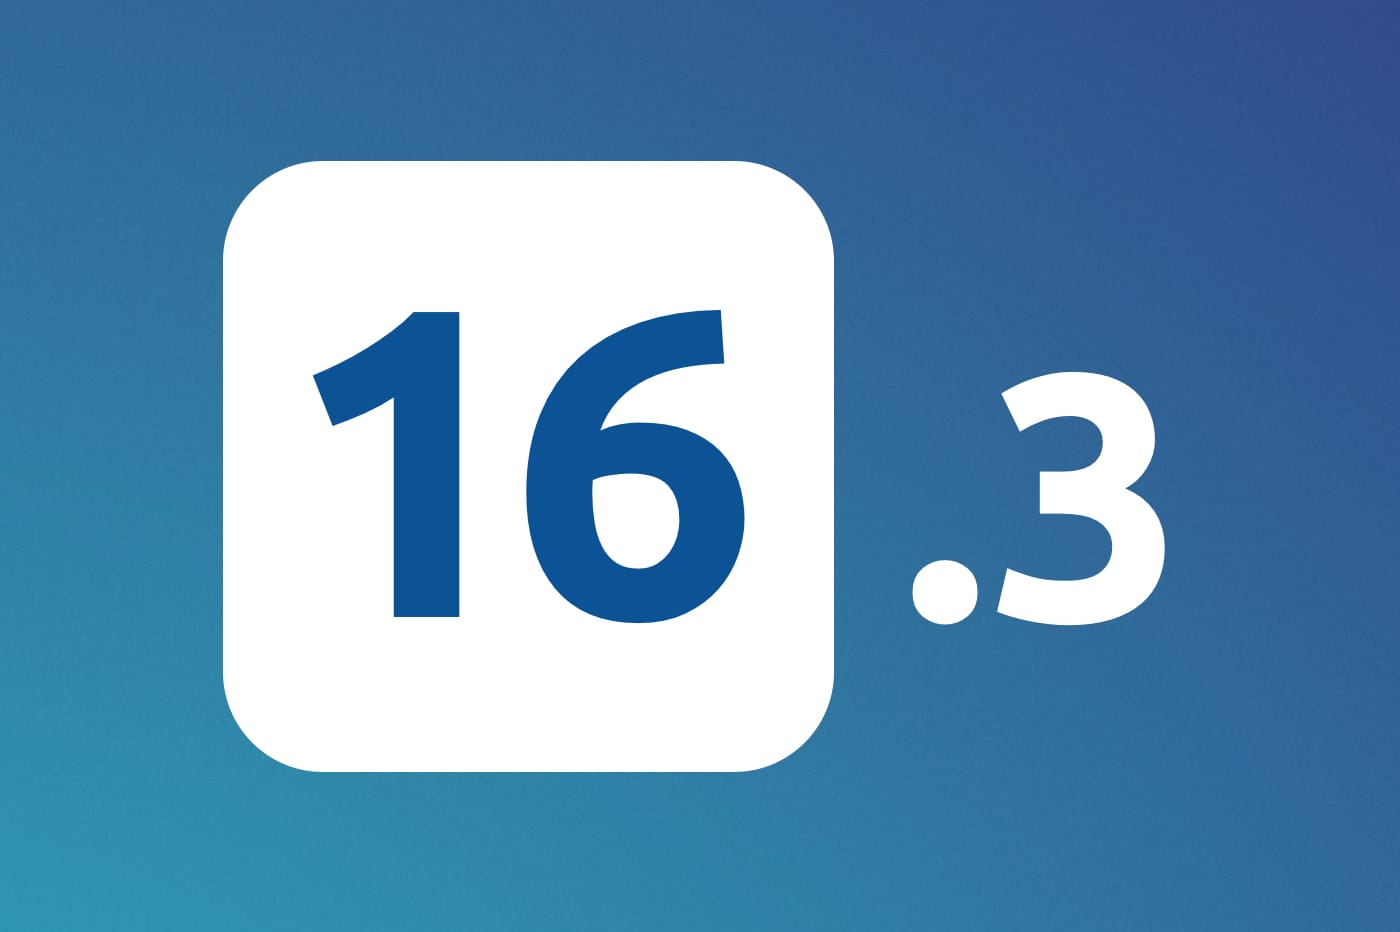 iOS 16.3 fond bleu